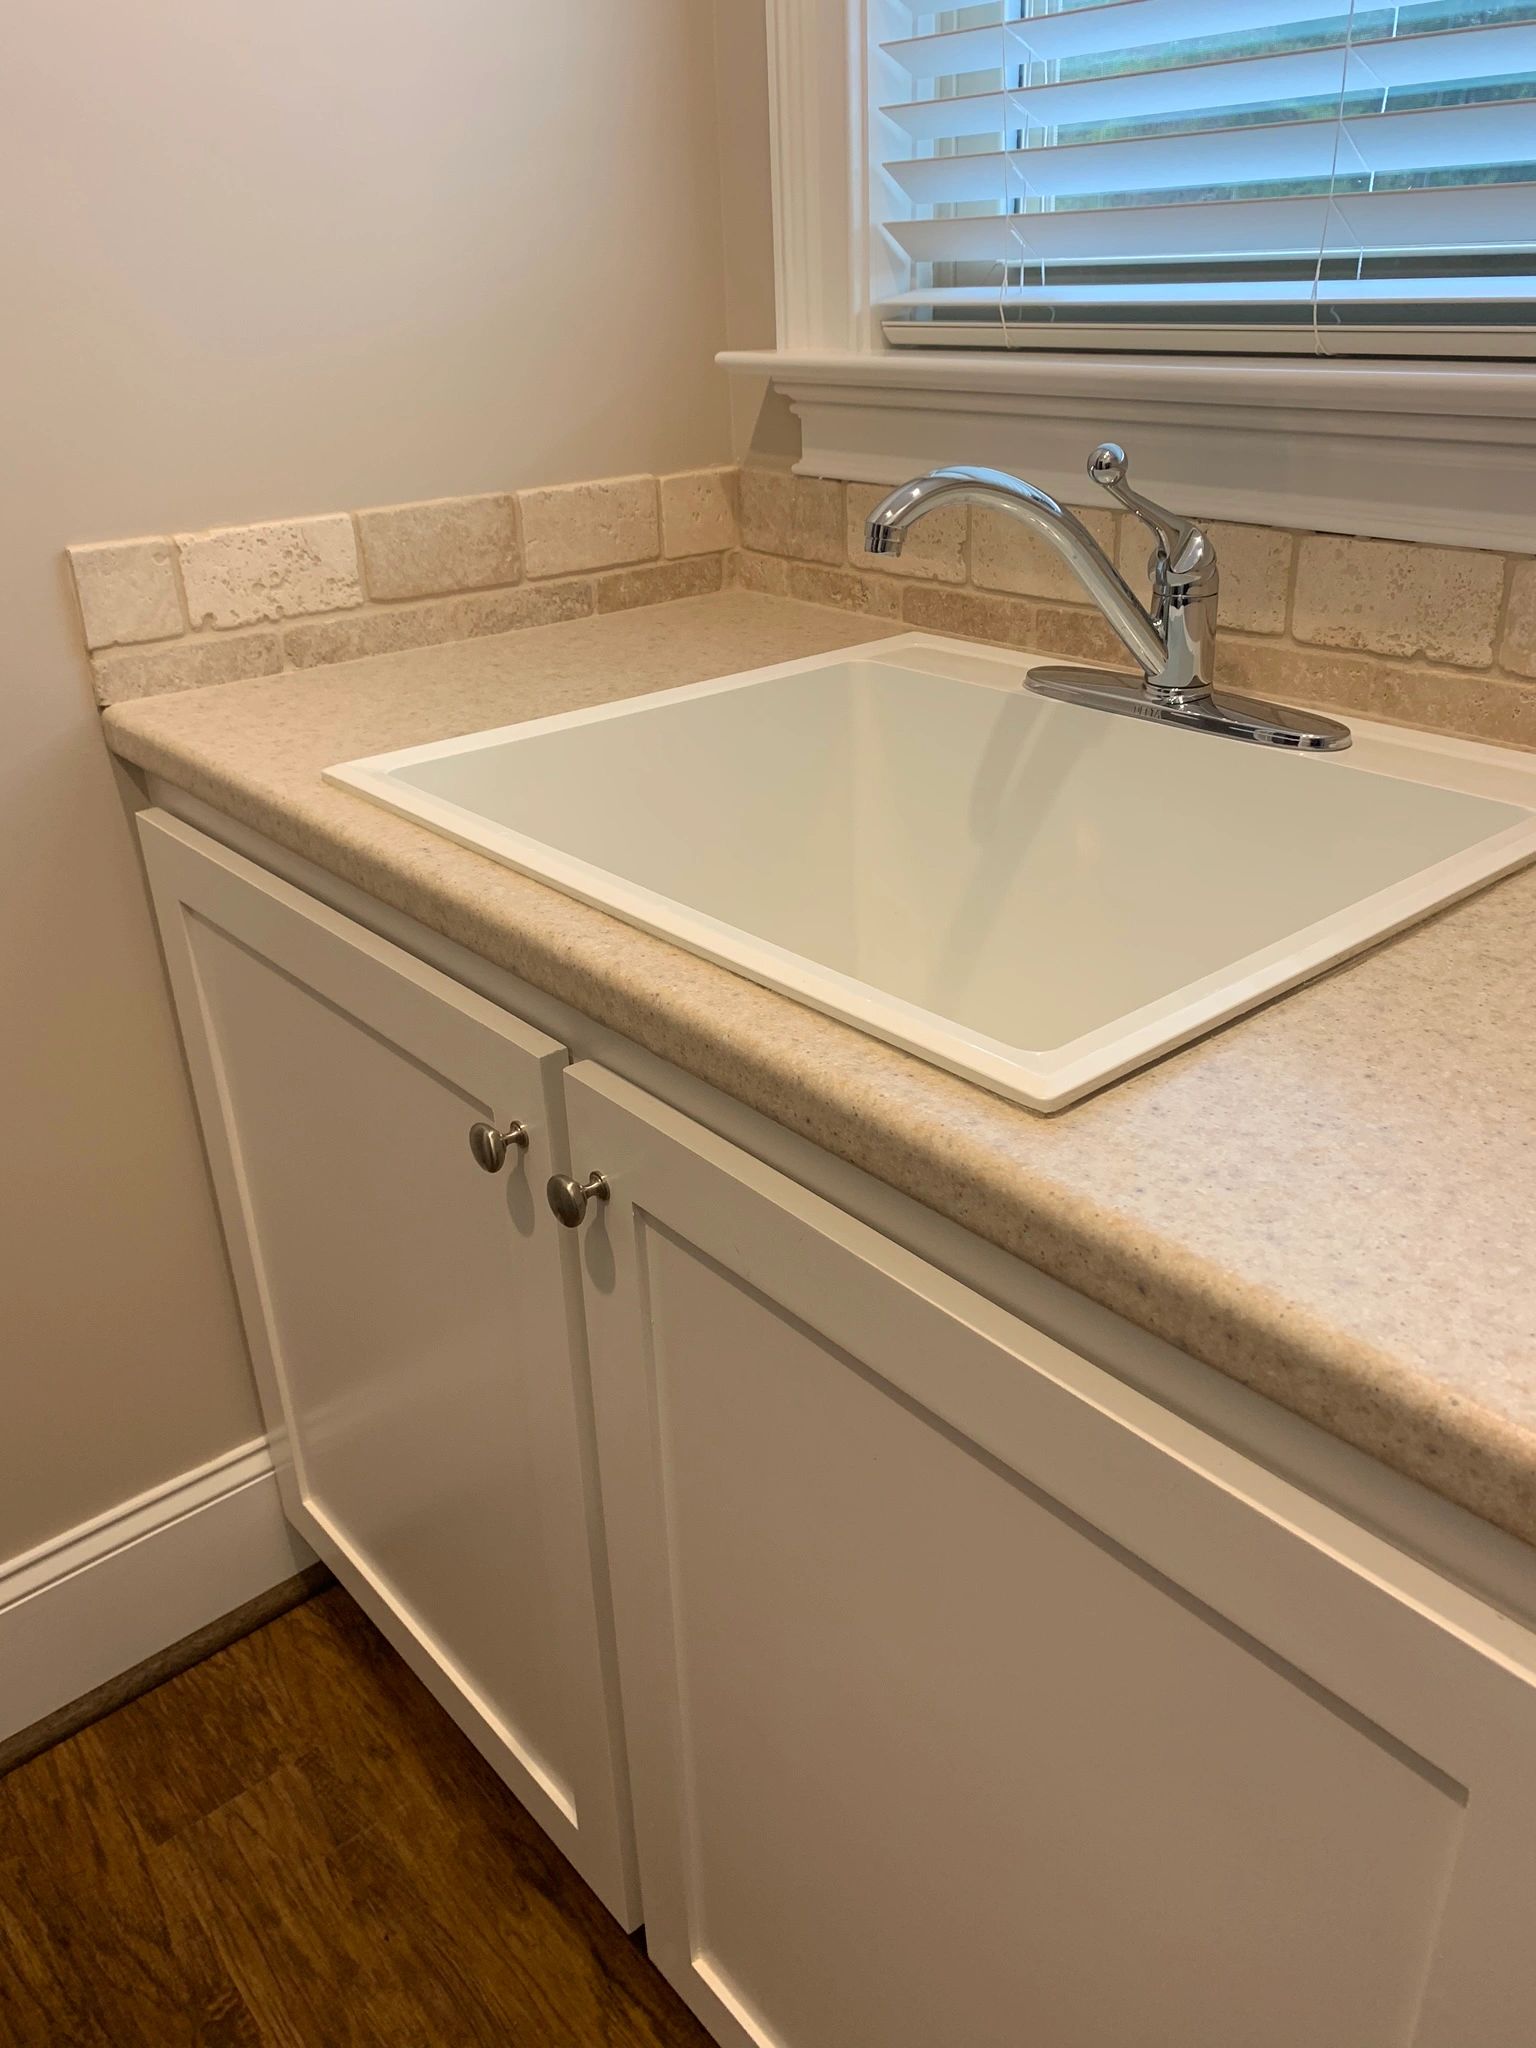 Custom cabinetry for laundry sink with tile backsplash